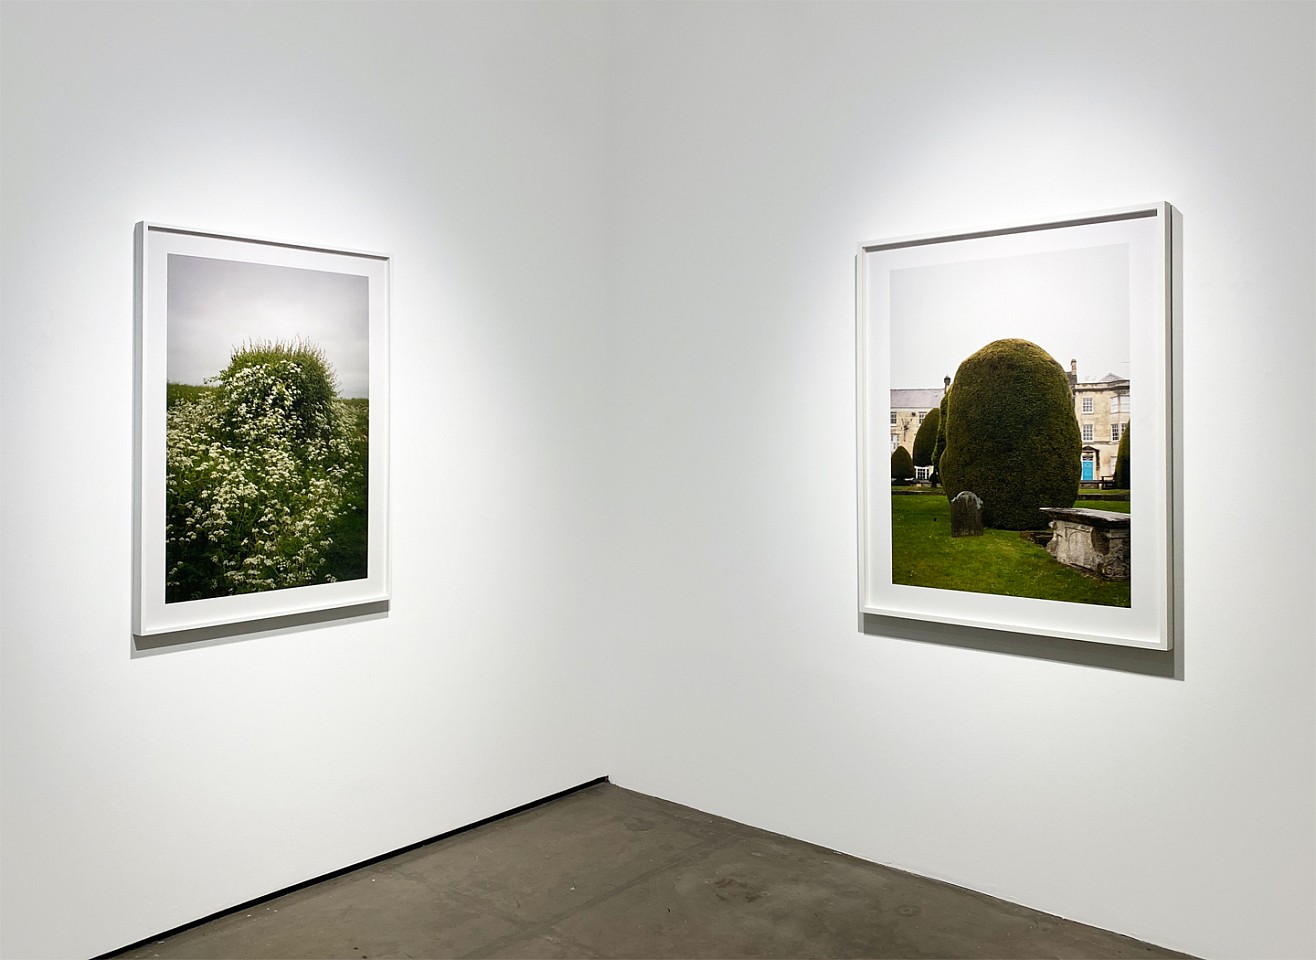 Susanna Howe
Installation Shot
HOWE
Susanna Howe, Flower Mound, 2017
Susanna Howe, Blue Door, 2017